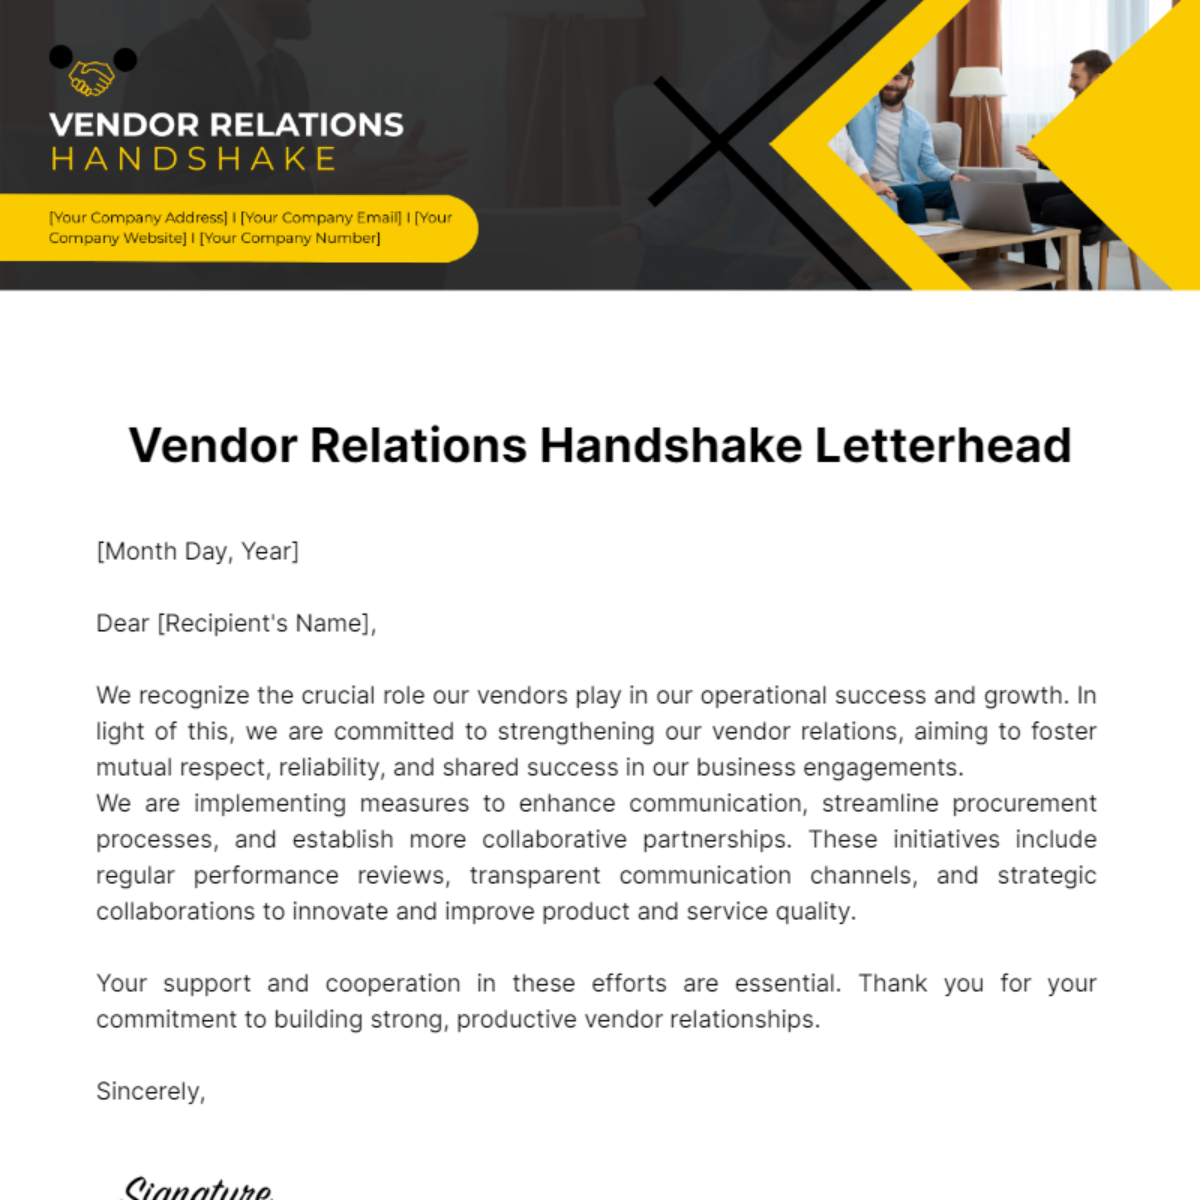 Vendor Relations Handshake Letterhead Template